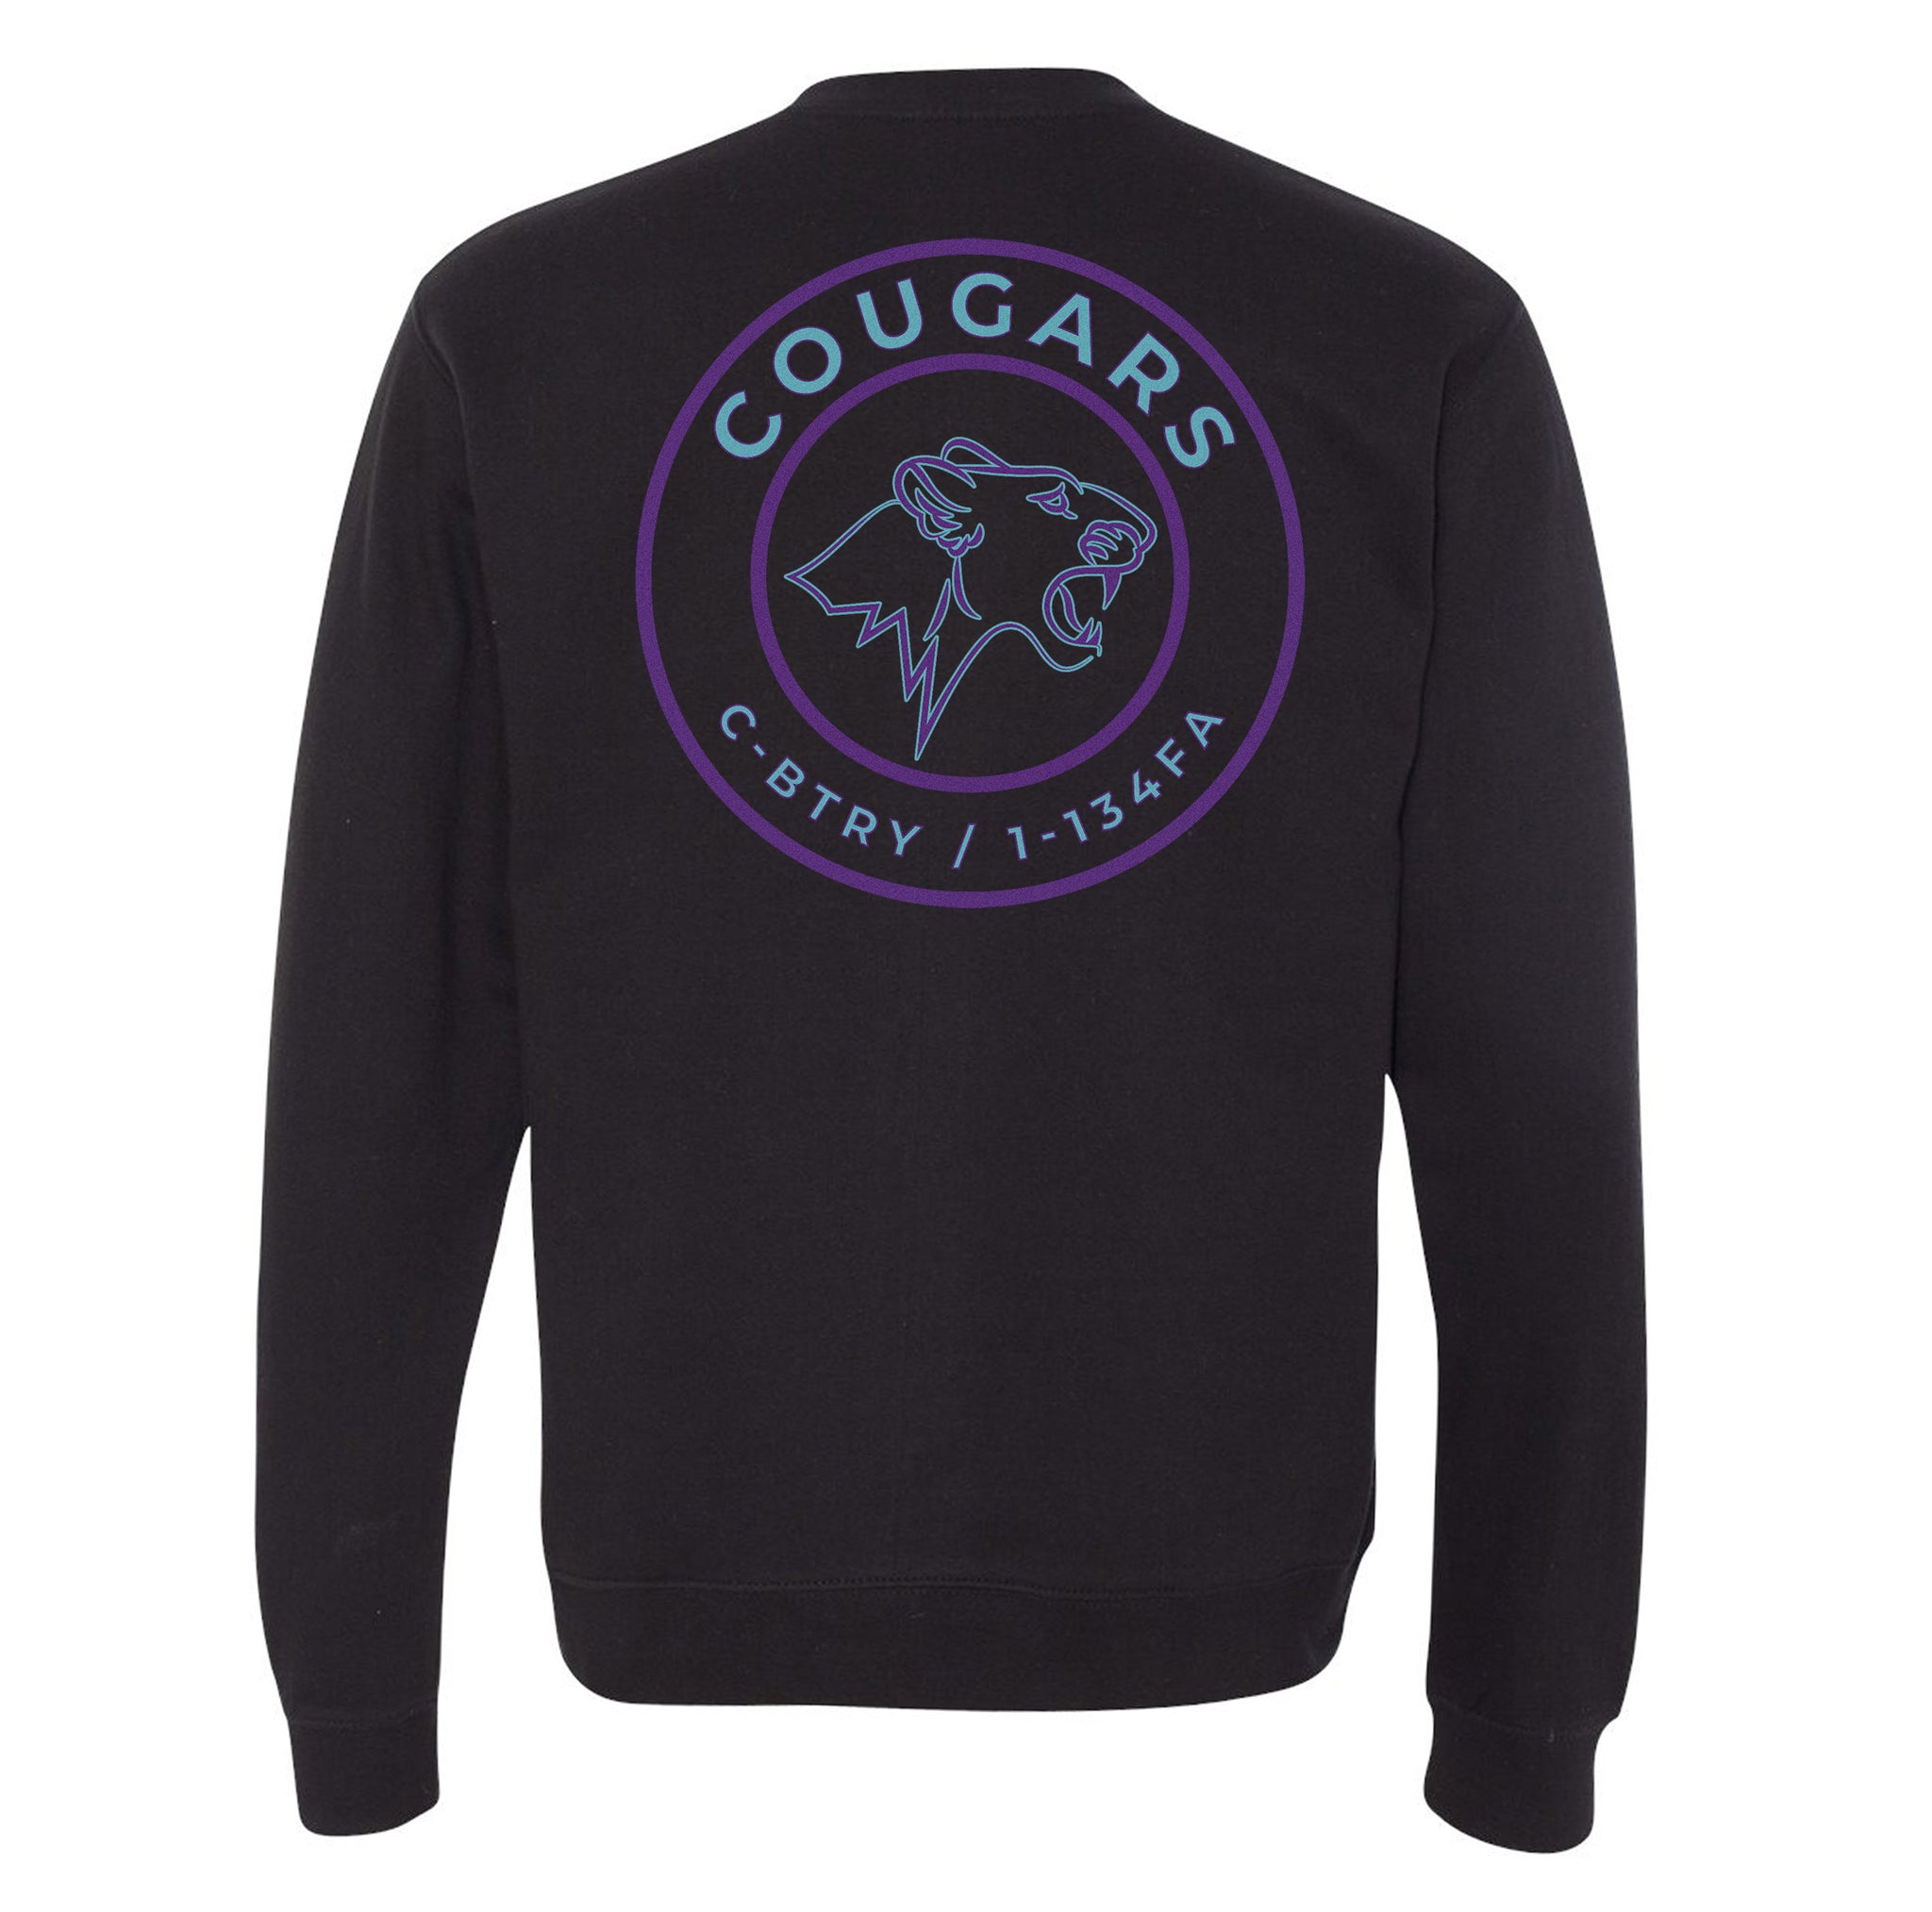 C Battery Cougars - PT Sweatshirt